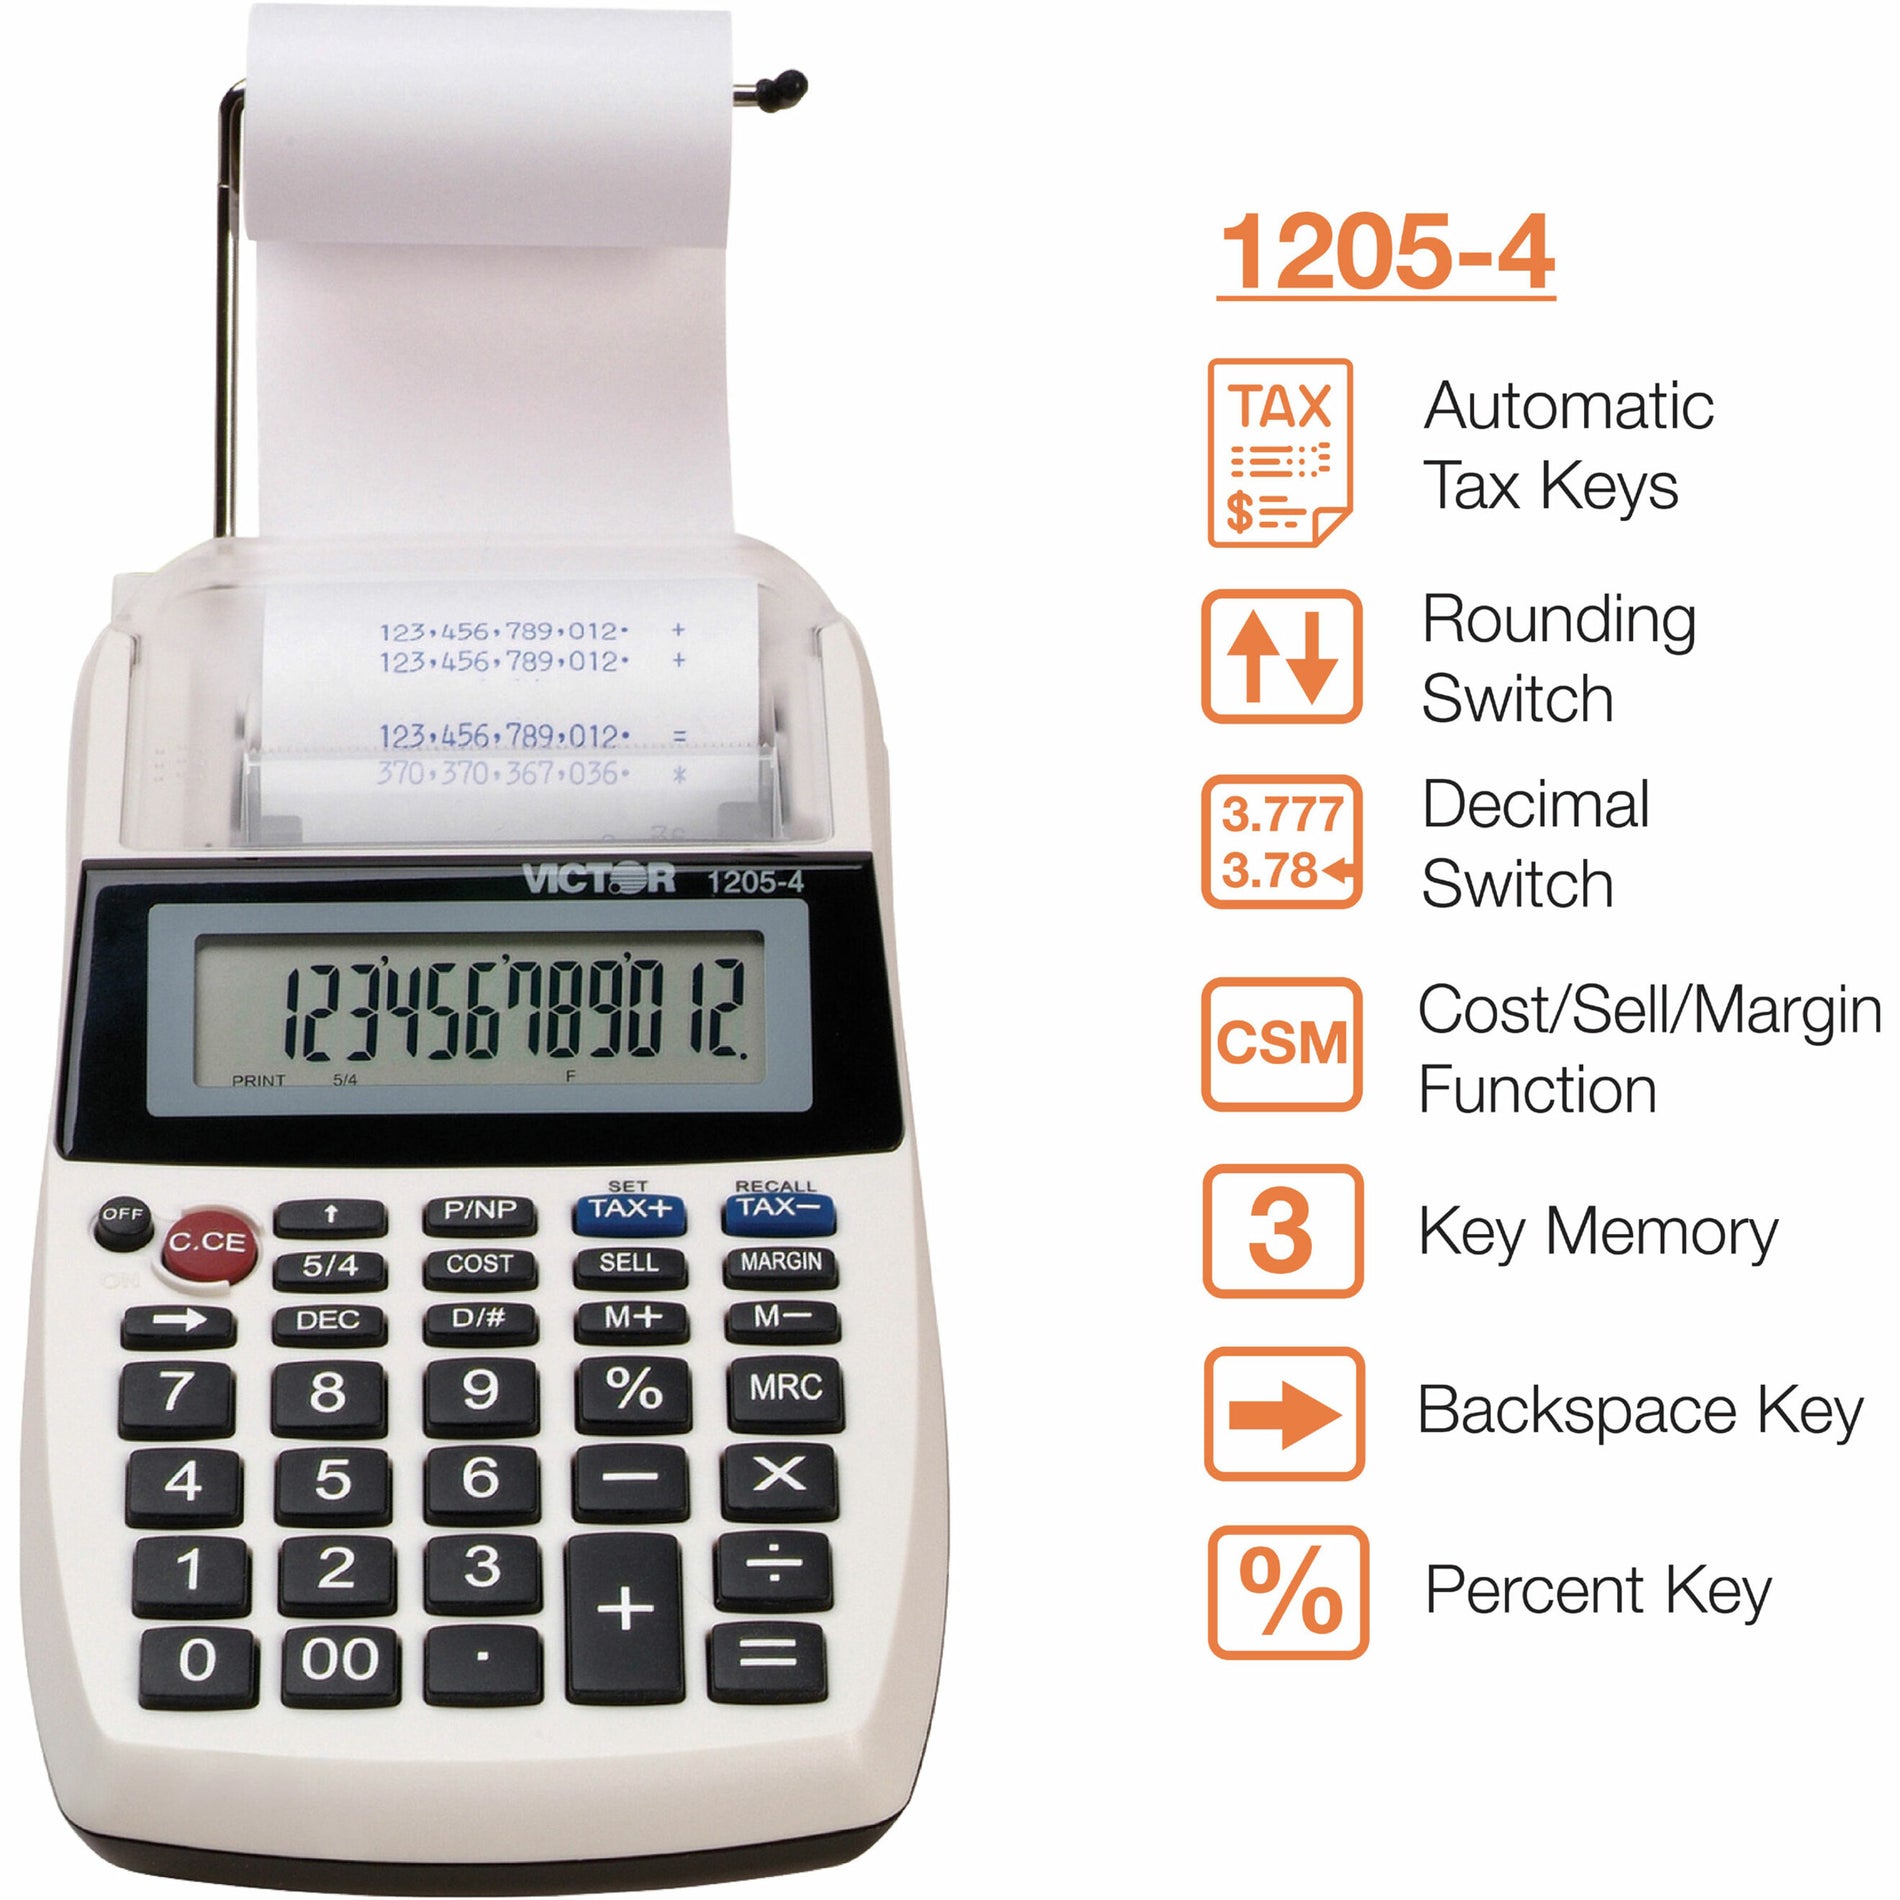 Victor 1205-4 12-Digit Printing Calculator, Portable, Environmentally Friendly, Large Display